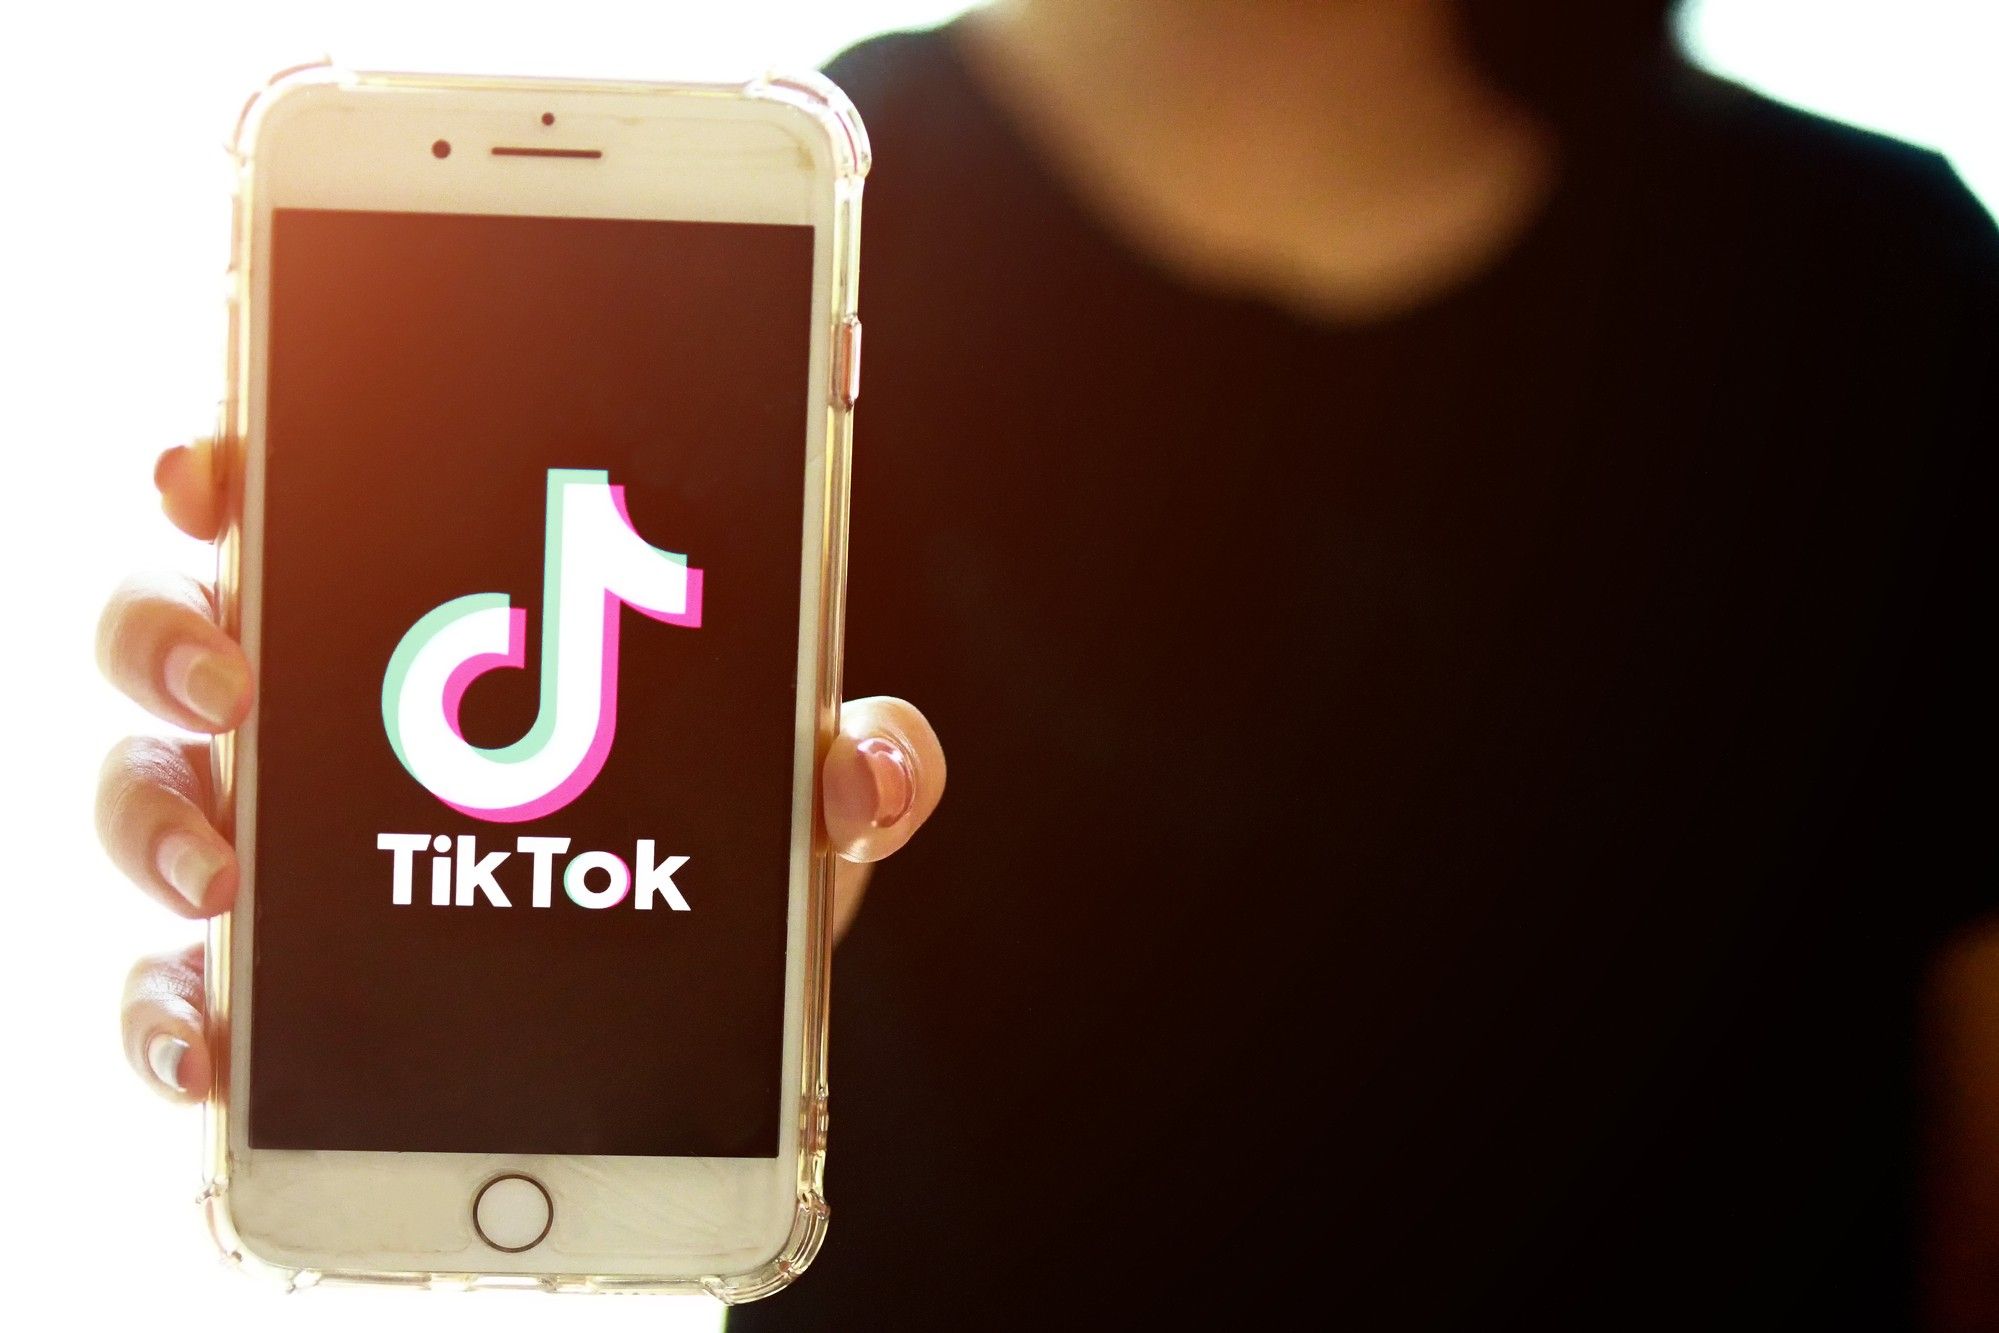 TikTok app regarding the class action lawsuit filed over TIkTok users data being stolen